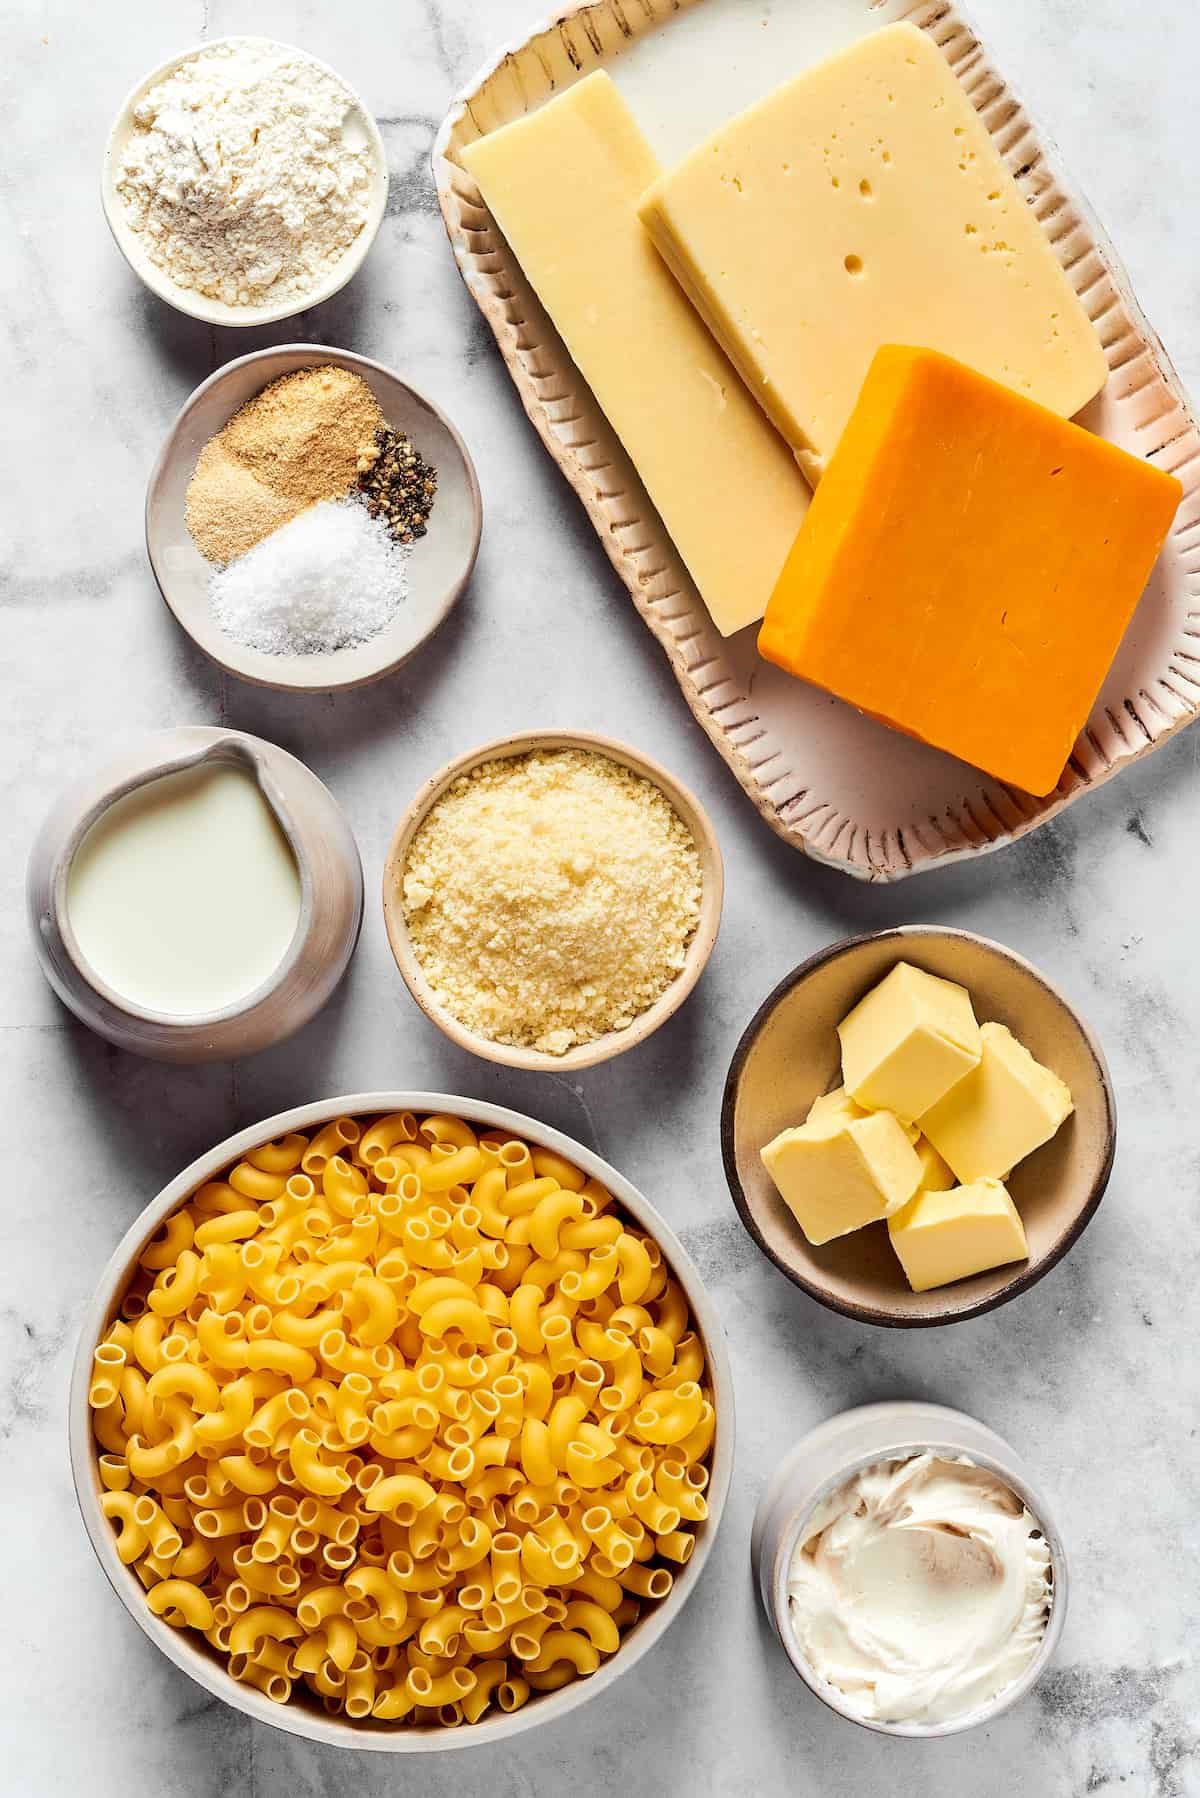 From top left: Flour, gouda cheese, mozzarella cheese, cheddar cheese, seasonings, milk, parmesan, butter, macaroni, heavy cream.